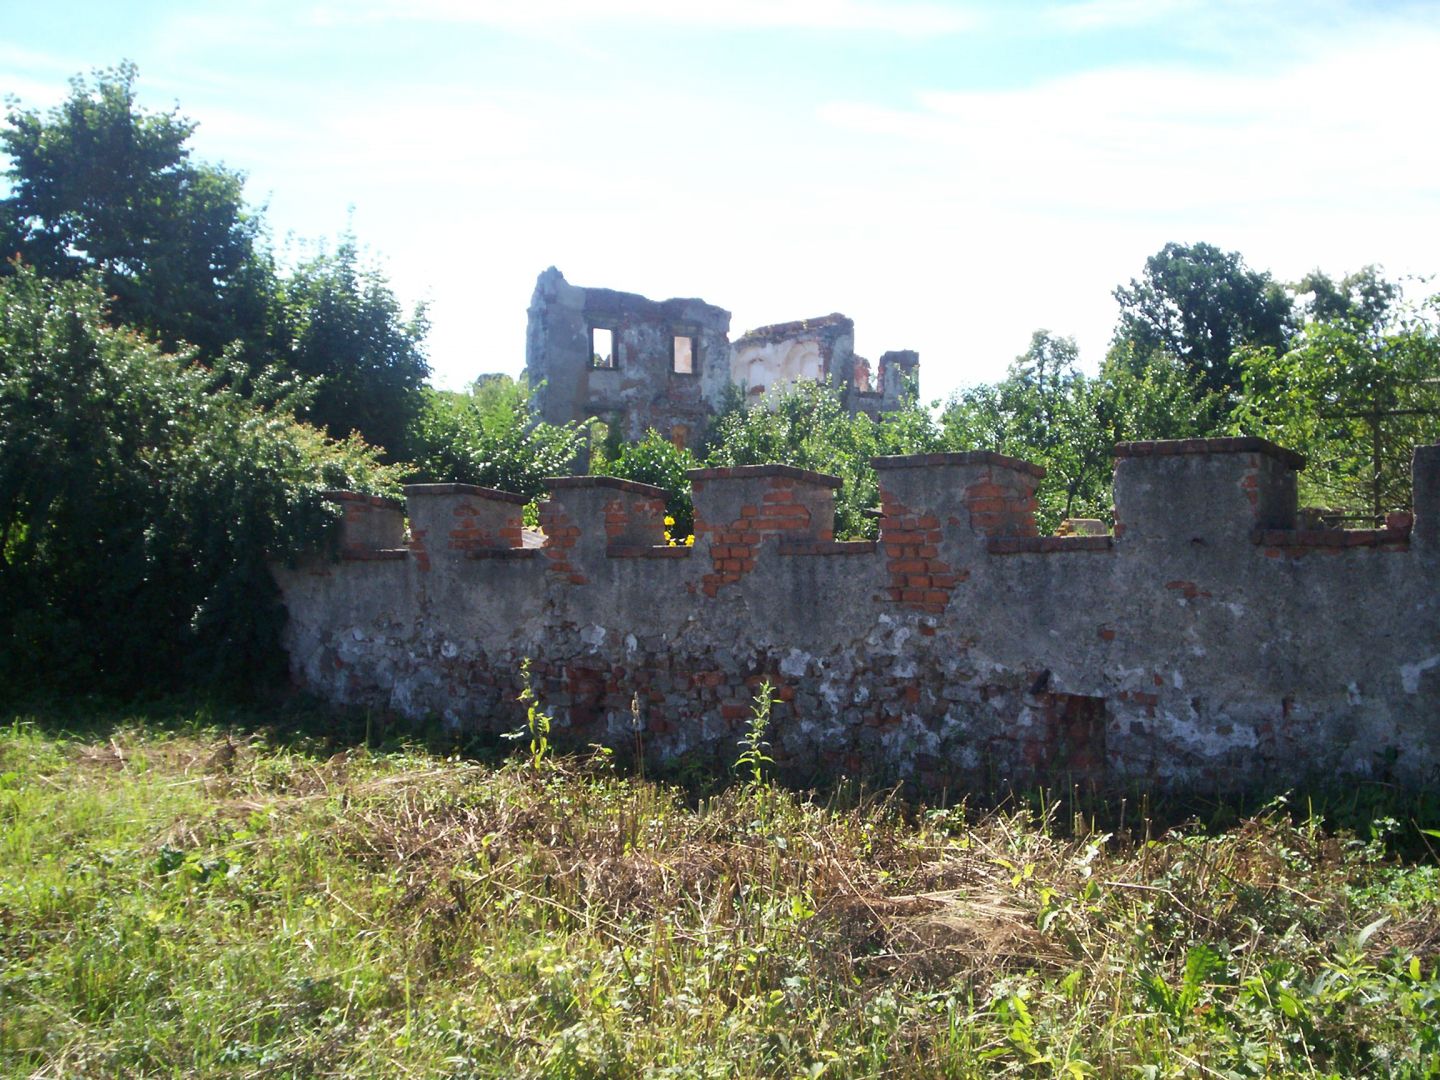 Grodztwo Castle Ruins